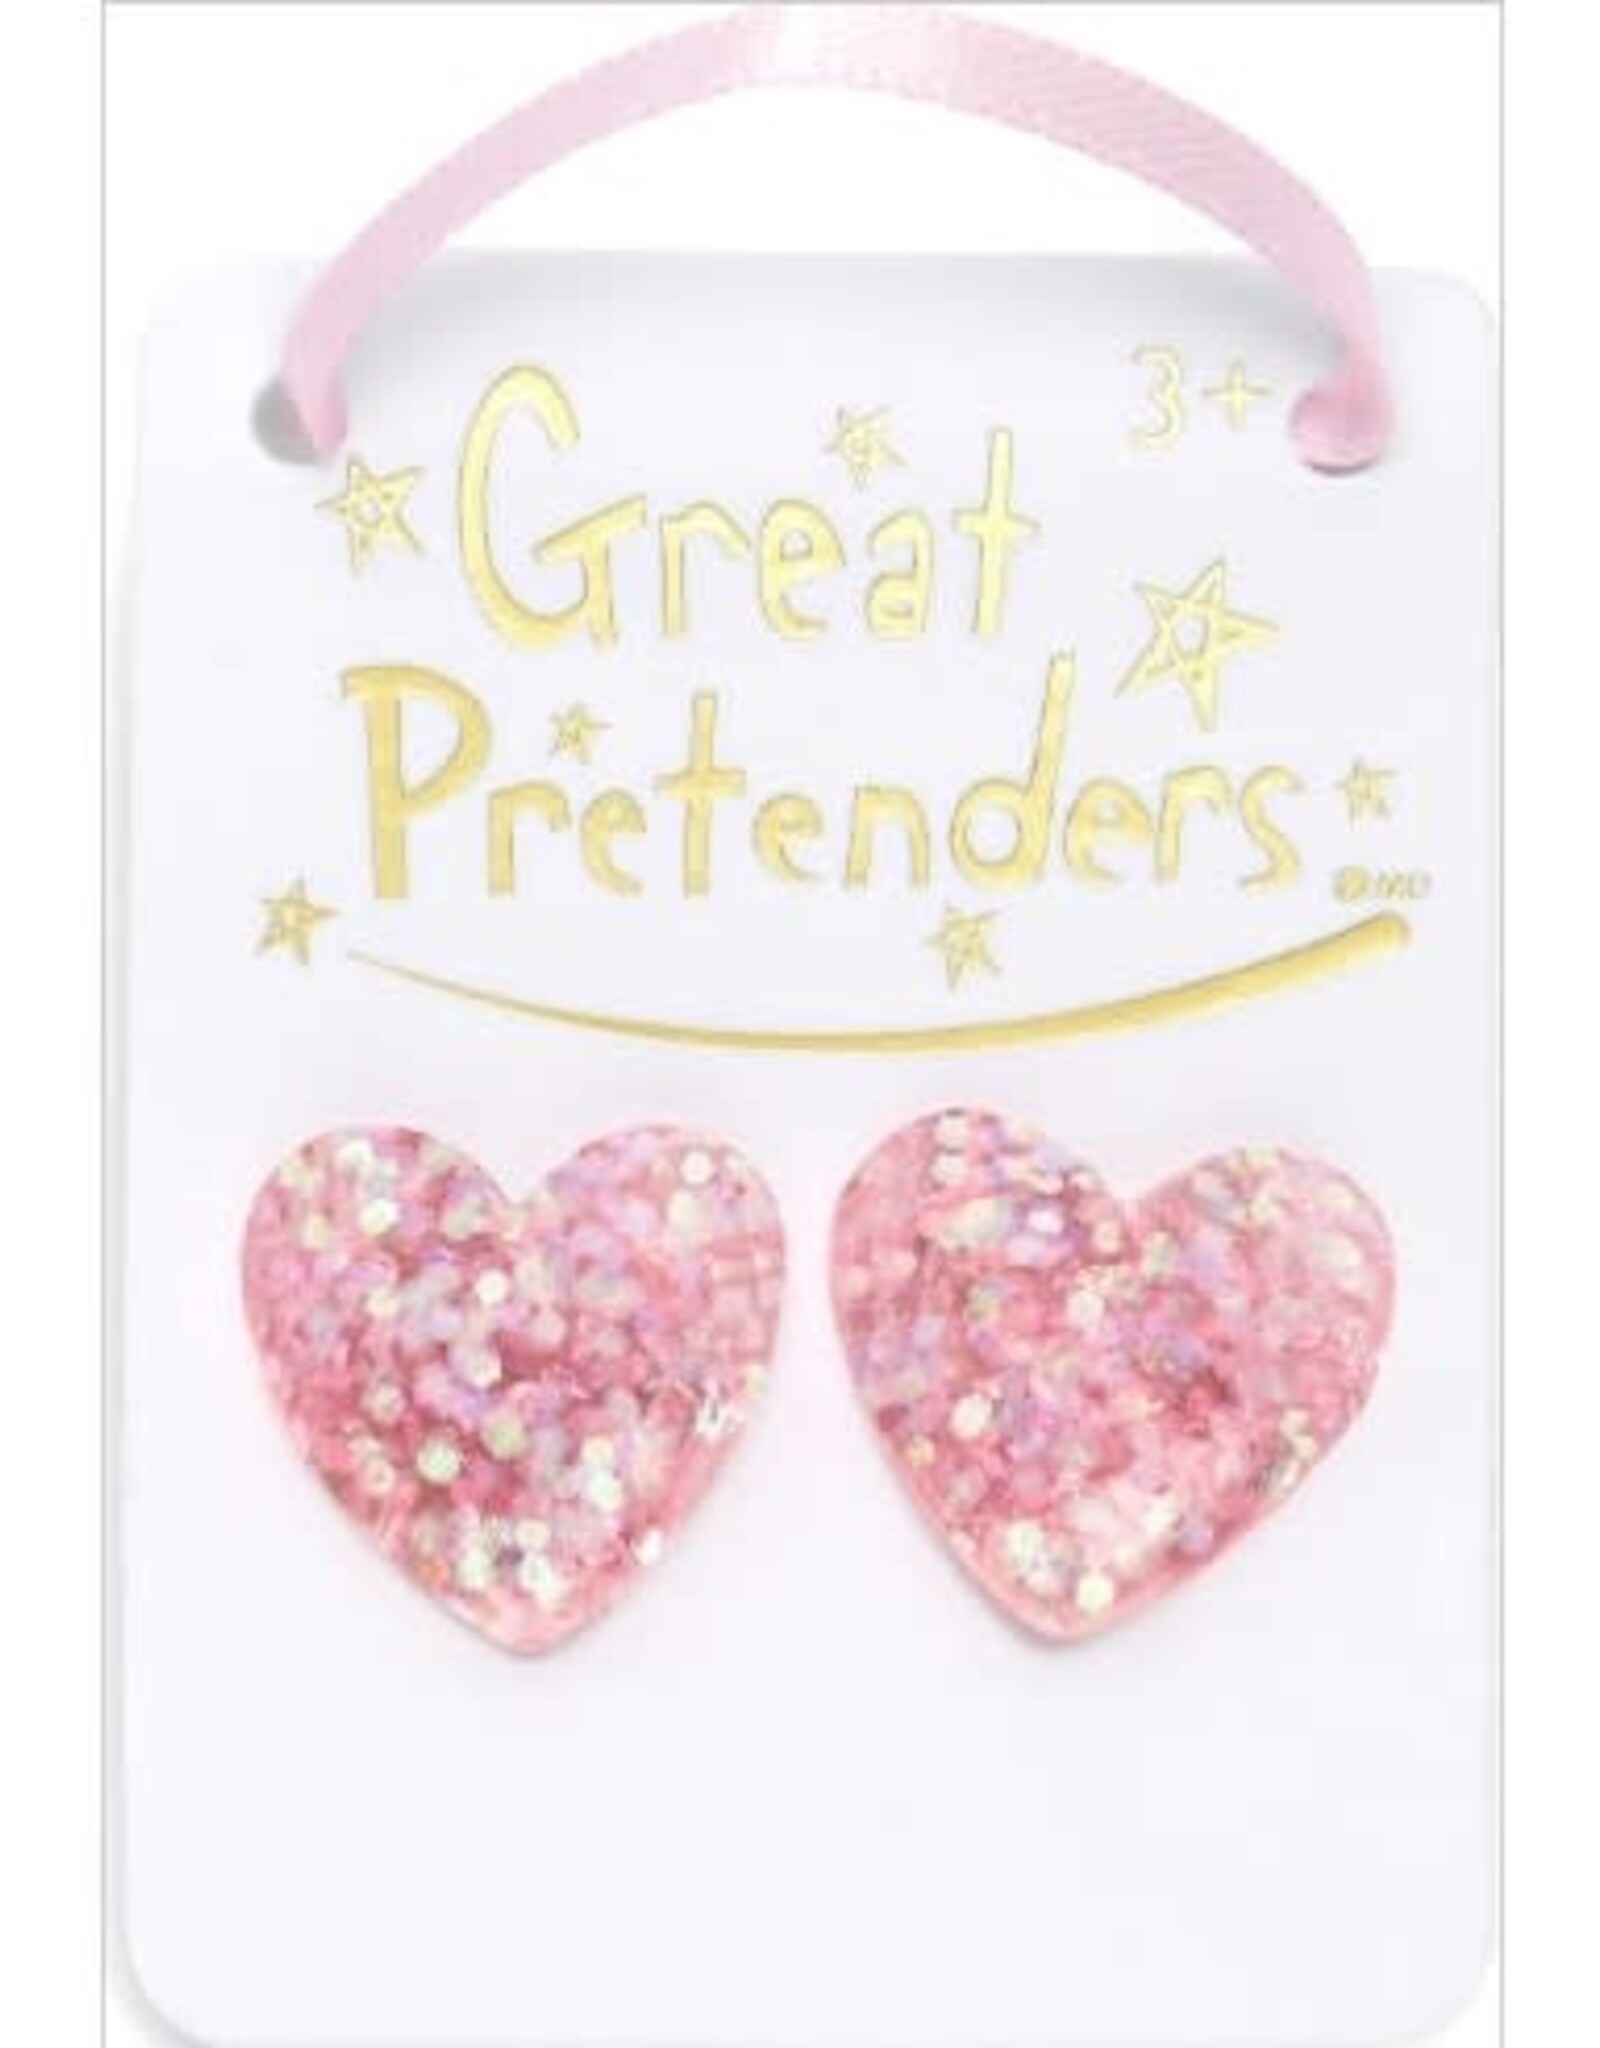 Great Pretenders Boutique Glitter Hearts Clip On Earrings, Assorted